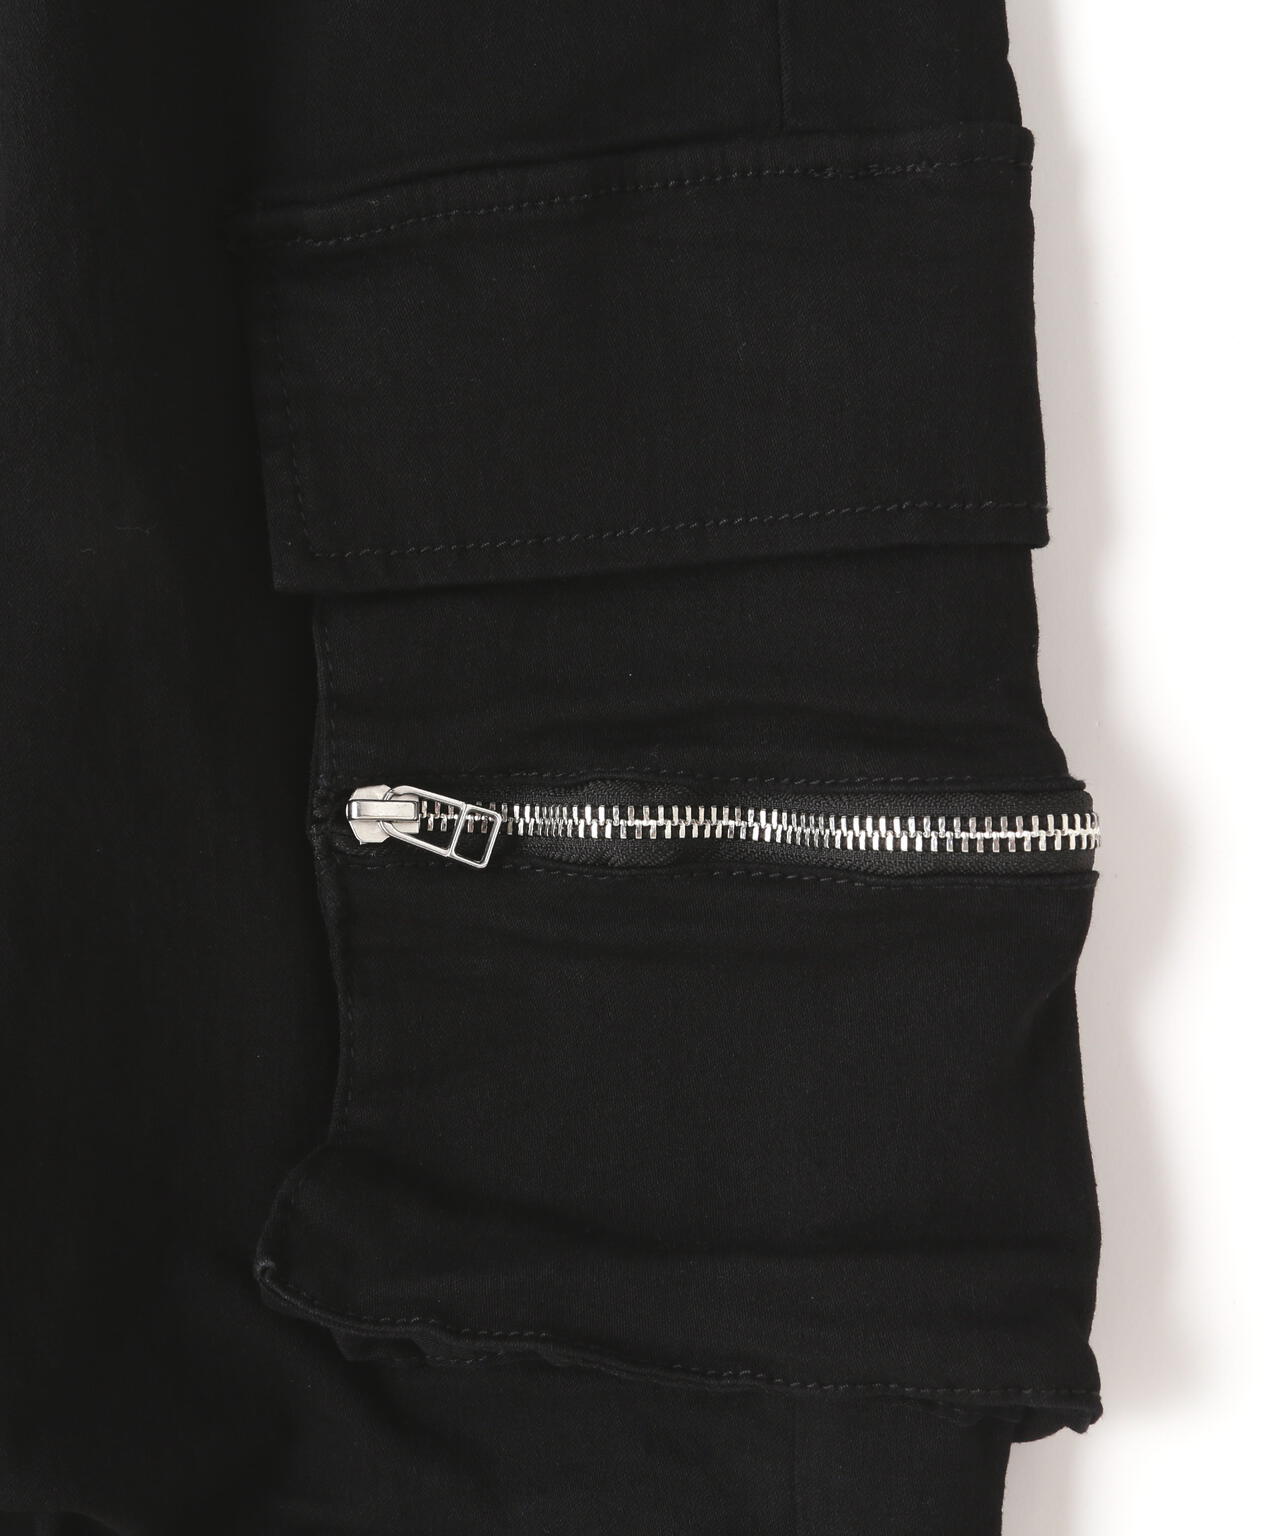 DankeSchon/ダンケシェーン/PREMIUM TC BLACK ZIP POCKET PANTS/ポケットパンツ